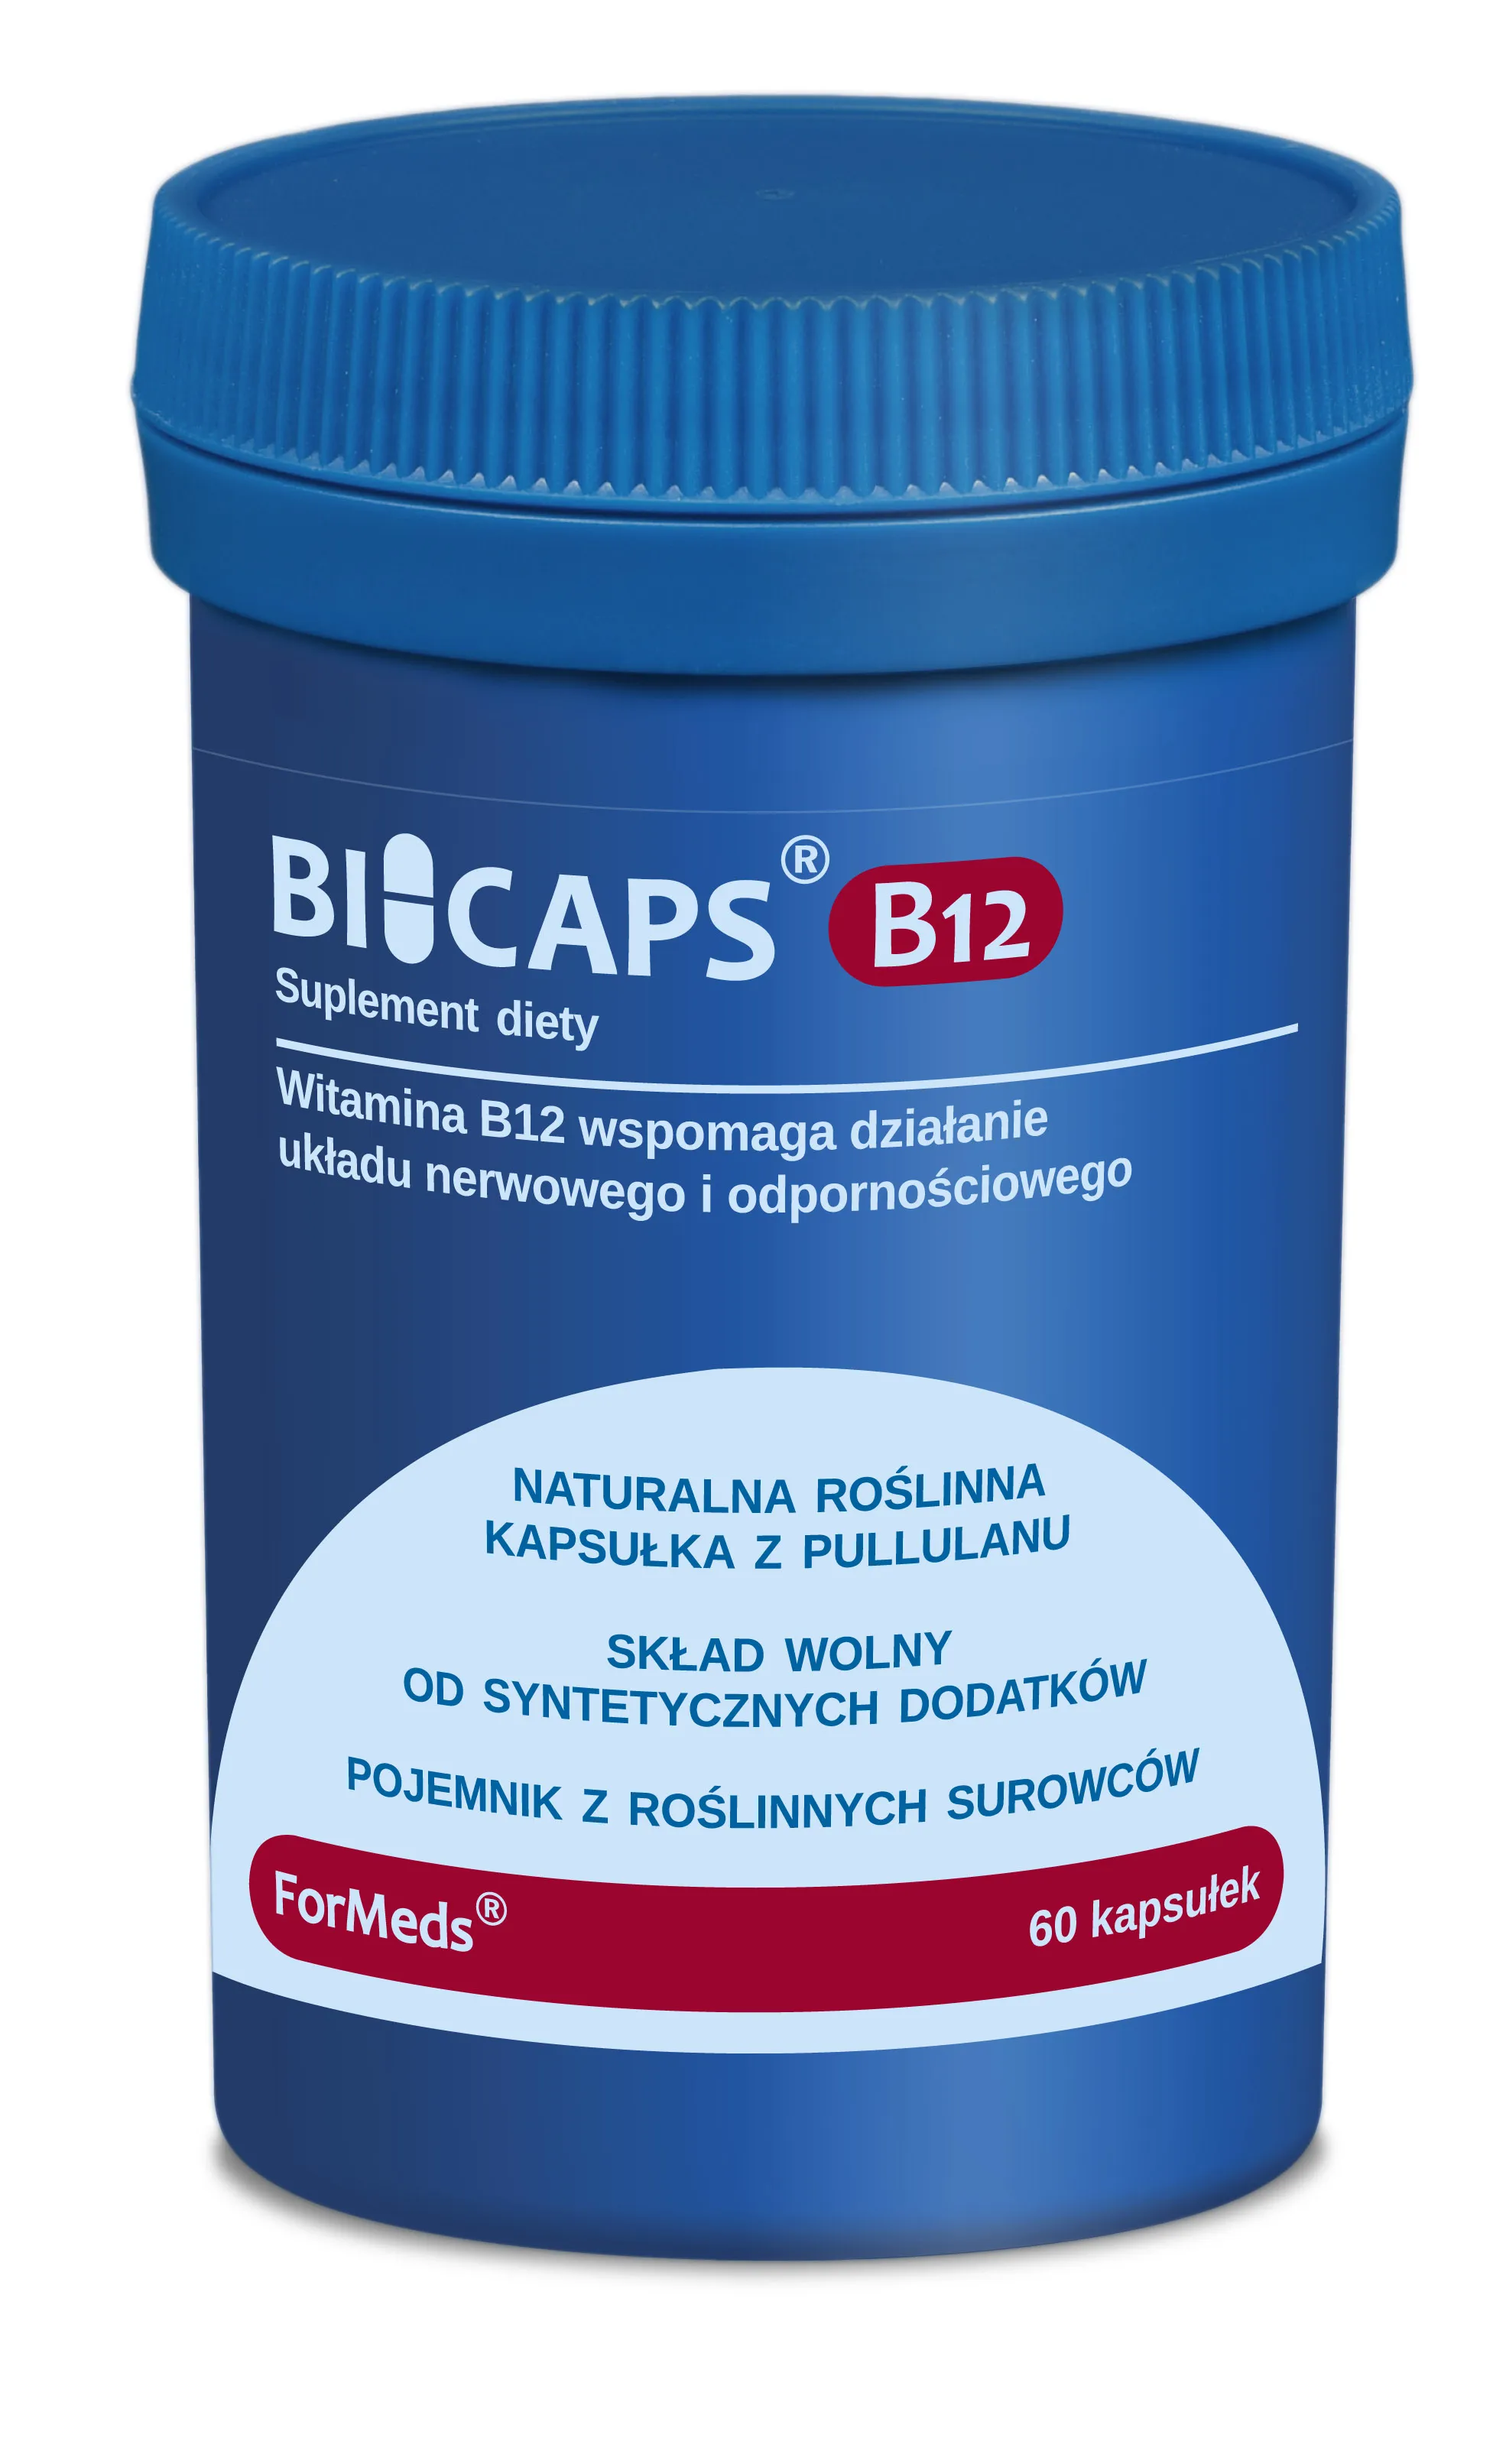 ForMeds Bicaps B12, suplement diety, 60 kapsułek